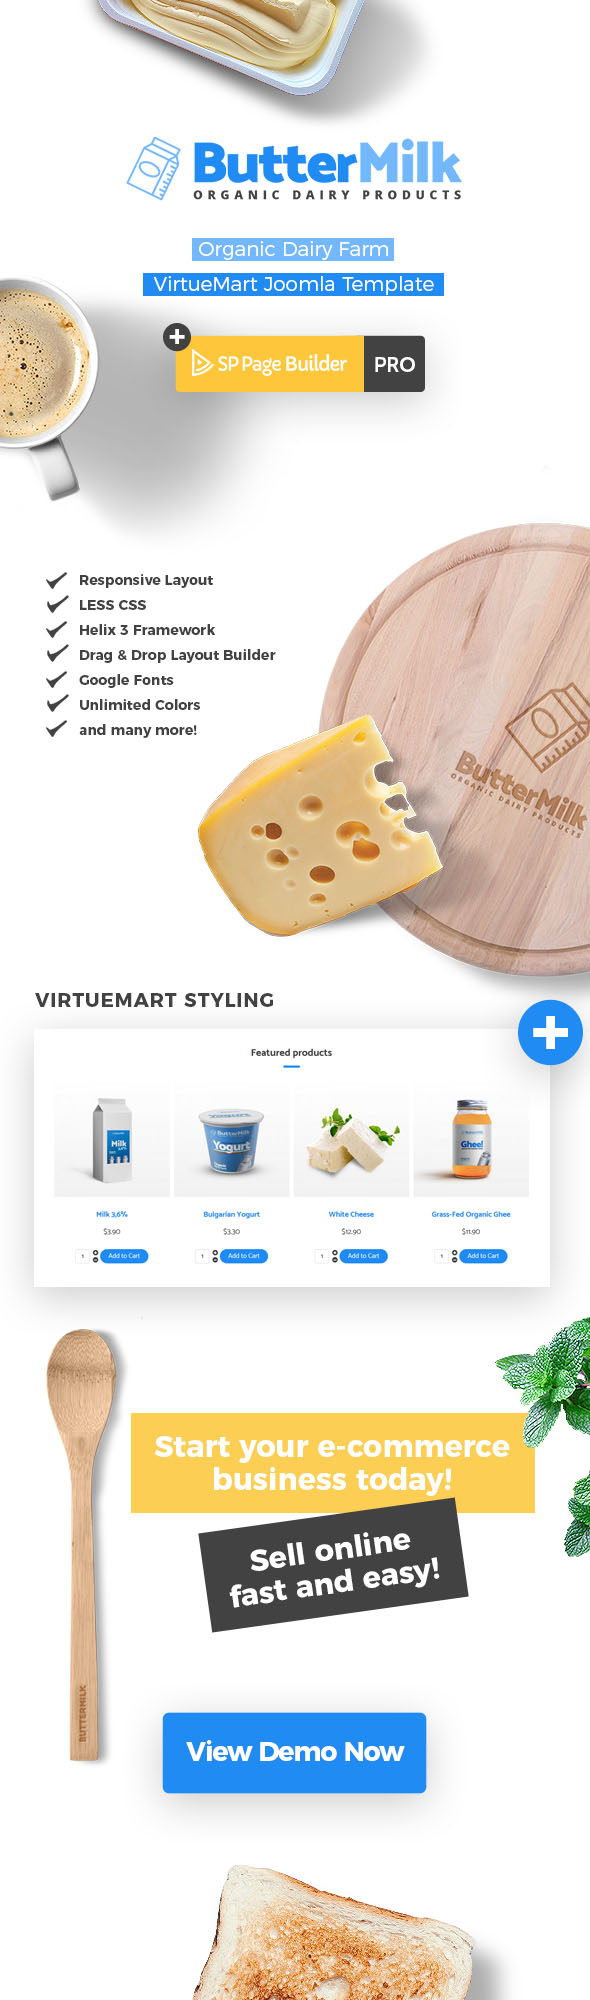 ButterMilk - Organic Dairy Farm VirtueMart Joomla Template - 1